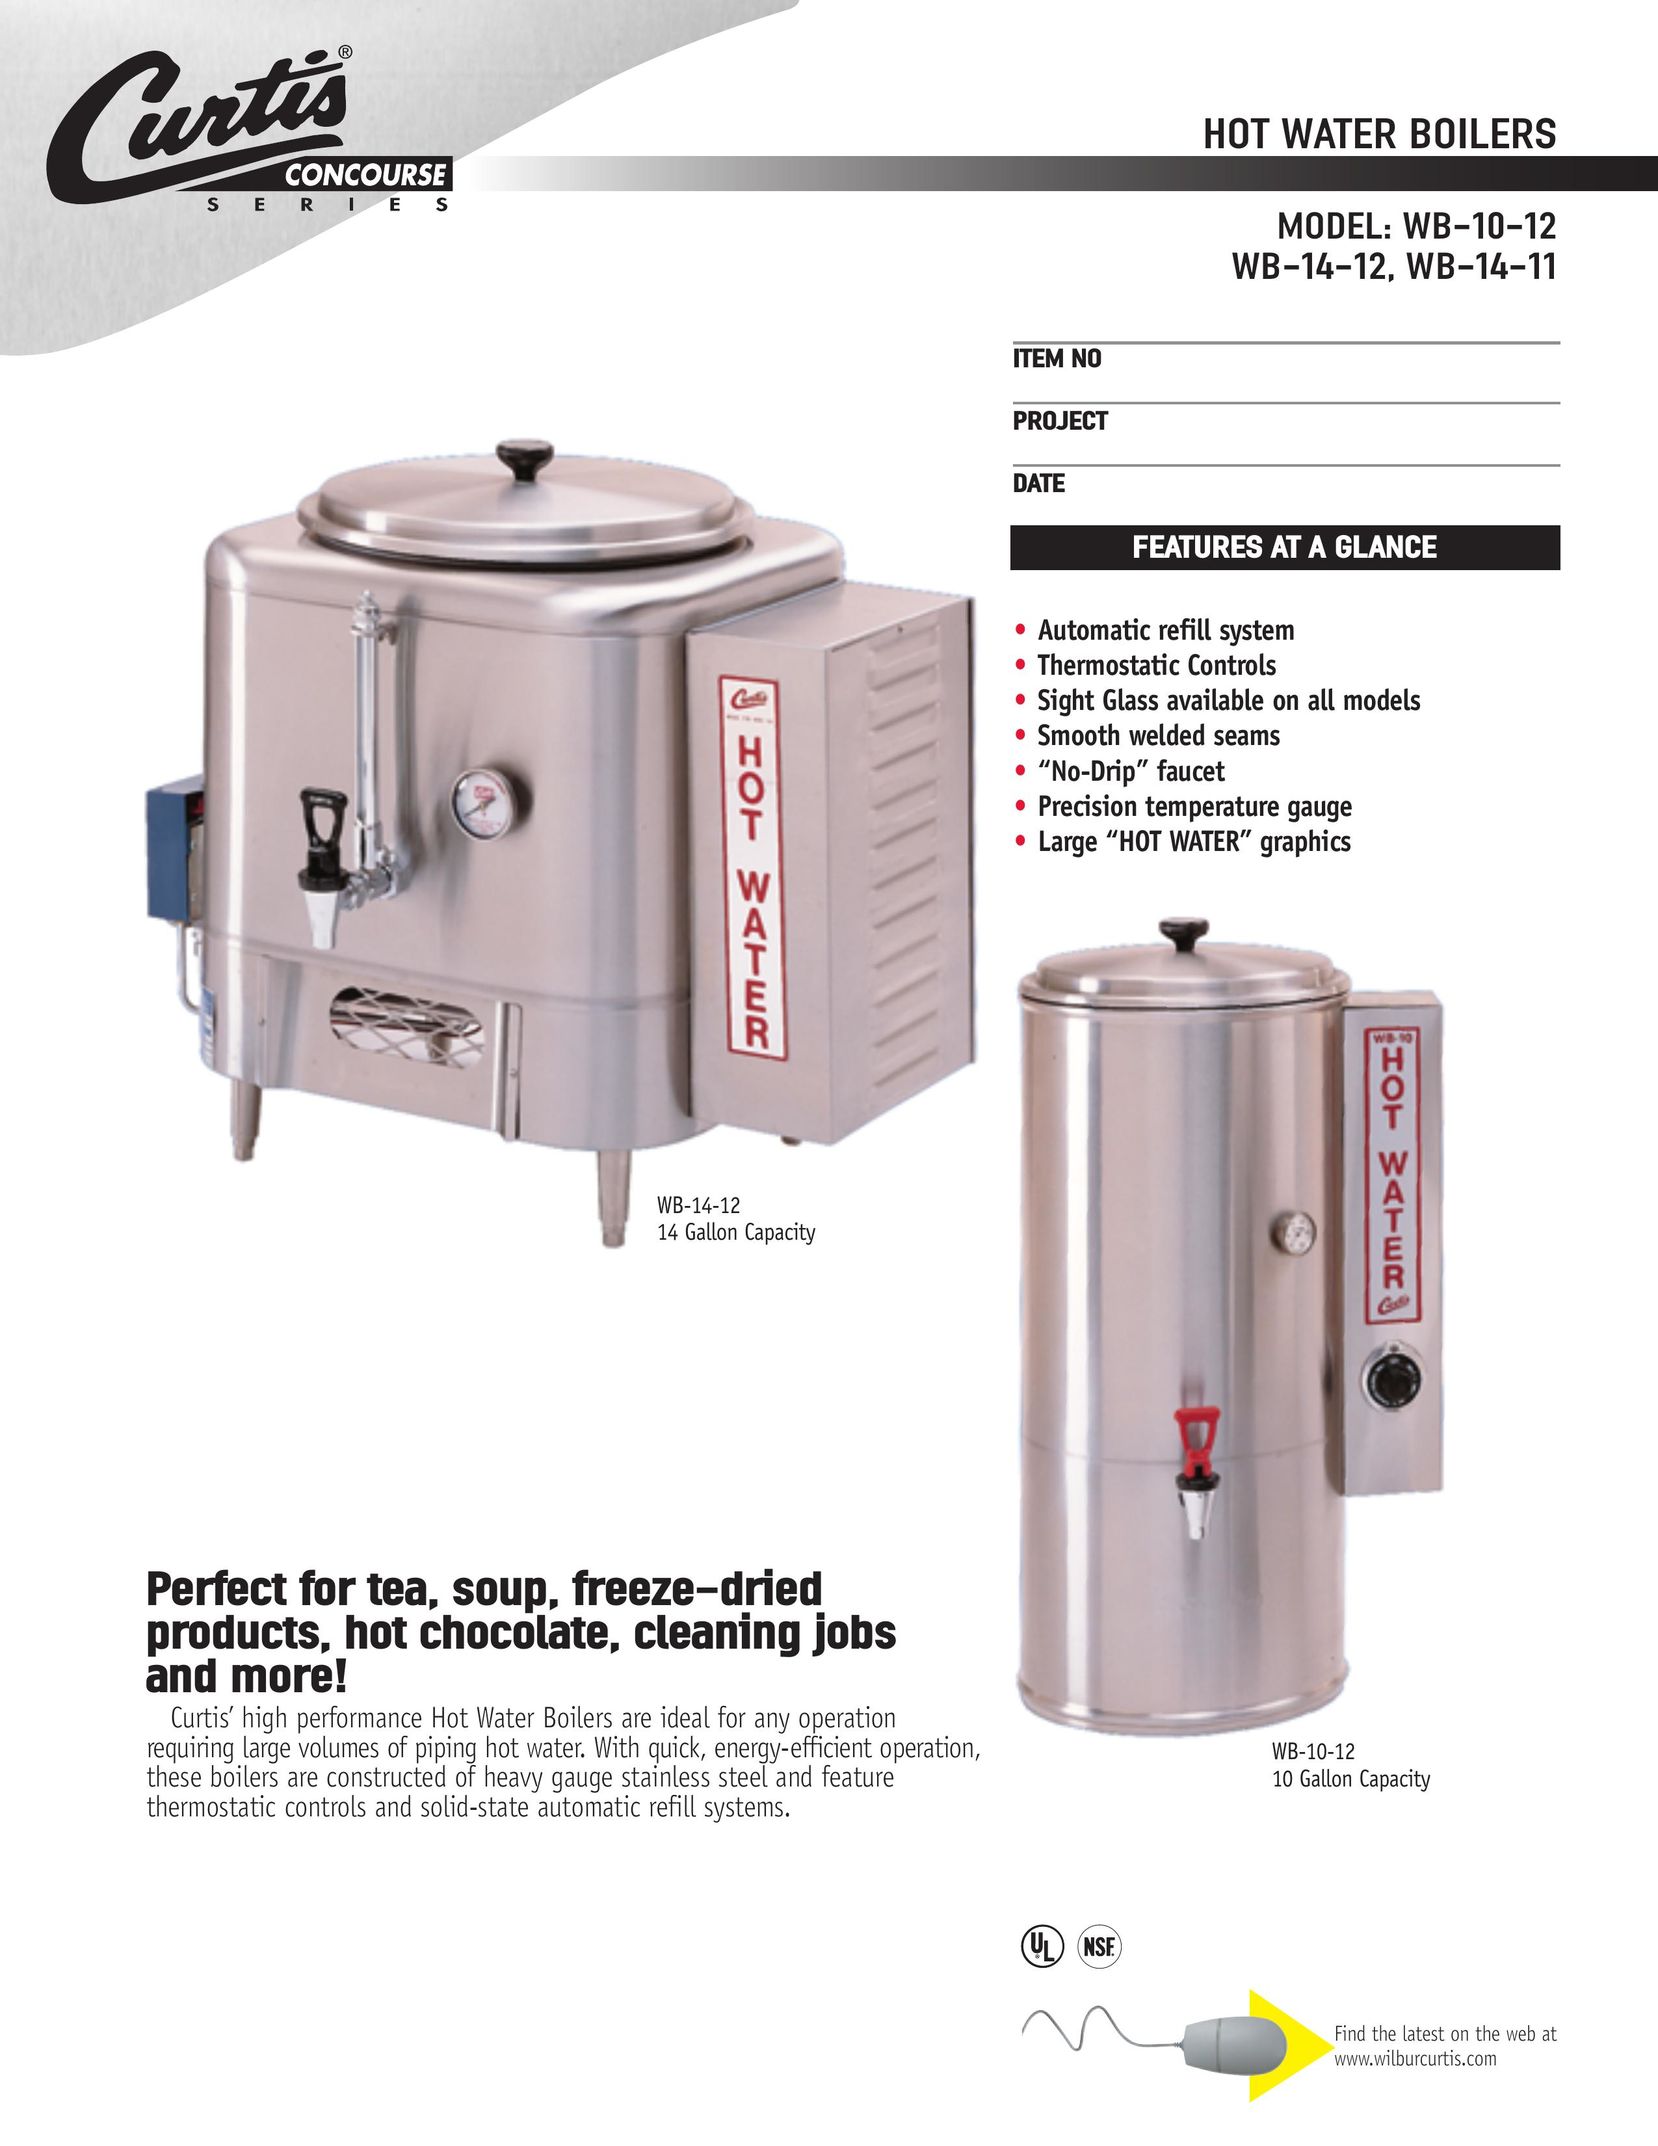 Curtis WB-14-11 Boiler User Manual